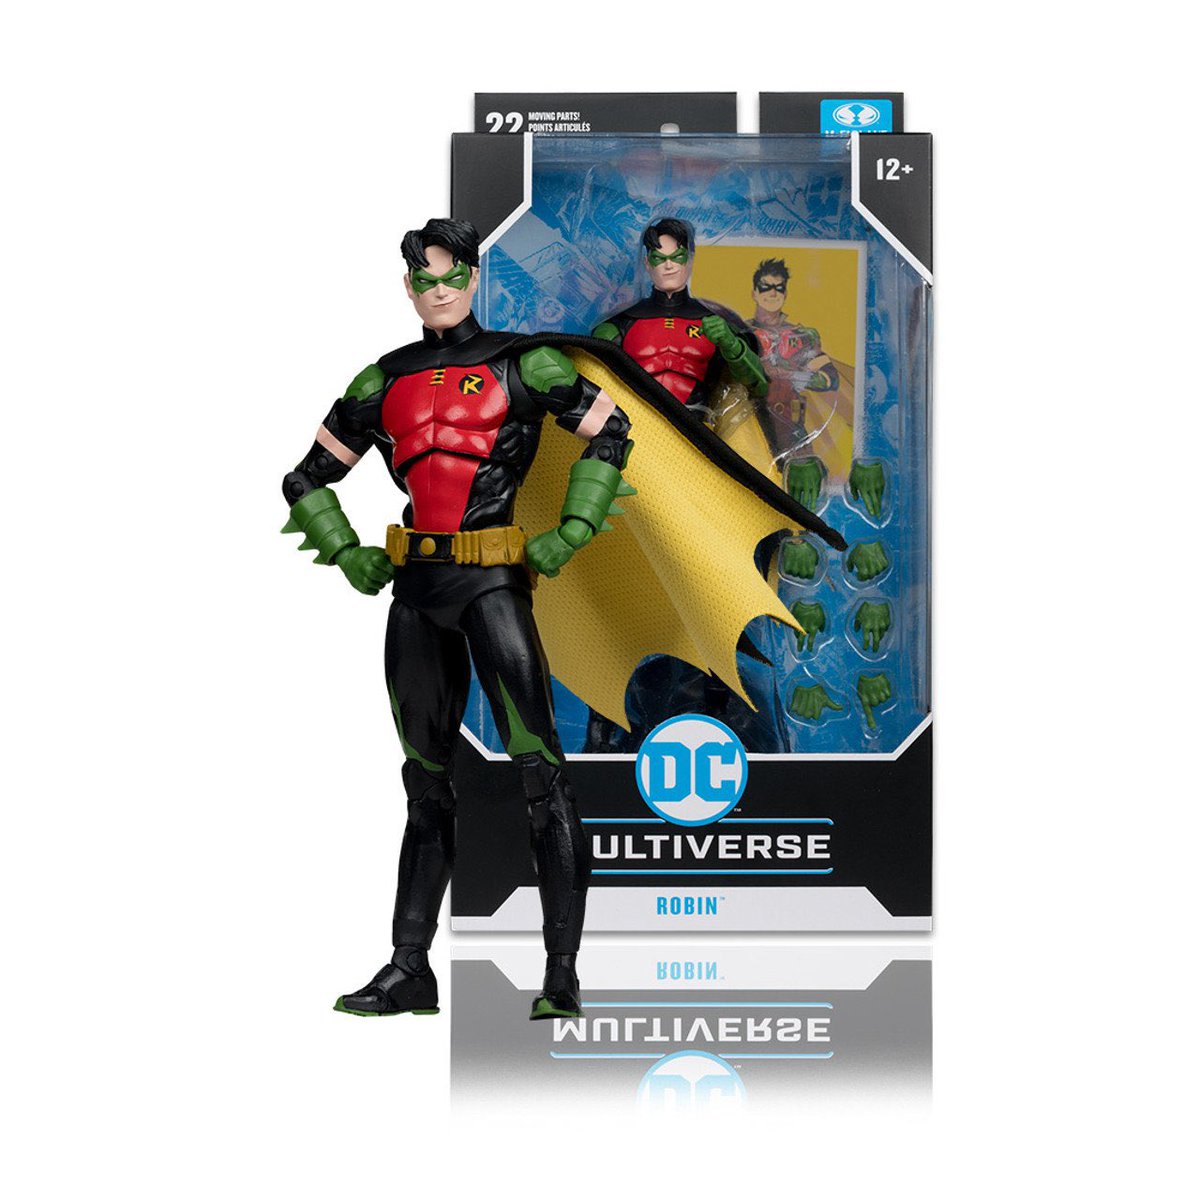 On amazon for preorder

Bane/Batman:
amzn.to/4bdvHhB

Tim Drake Robin:
amzn.to/4dxugMG

#ad #affiliatemarketing #dcmultiverse #bane #toyshiz